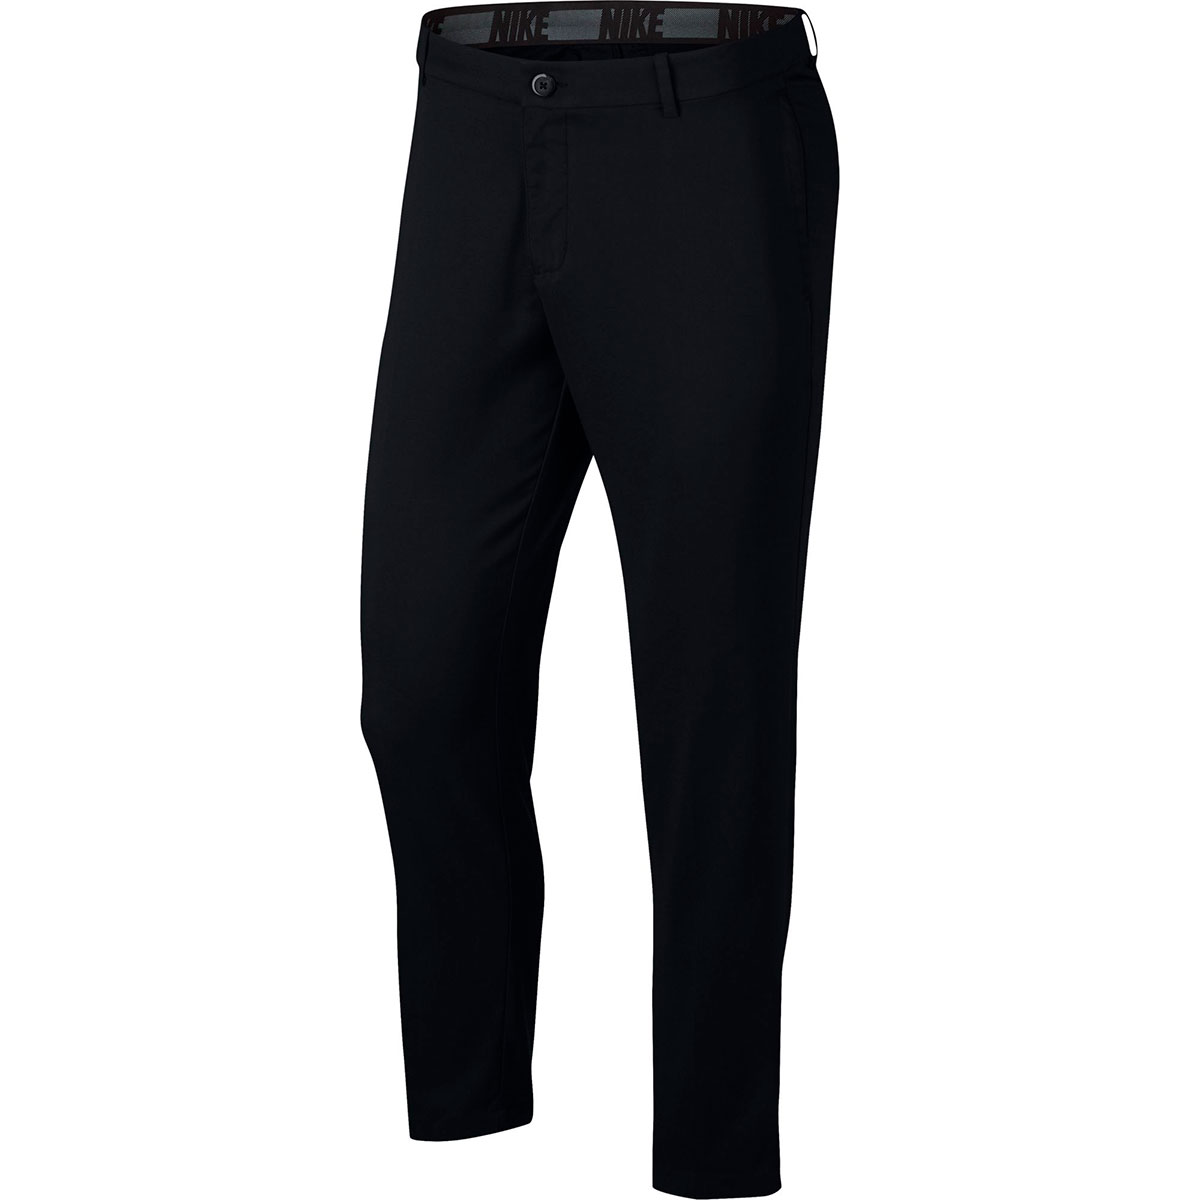 Nike Men's Golf Trousers Pants Flex Black AJ6317-010 Size 30 Training Pants  NWT | eBay